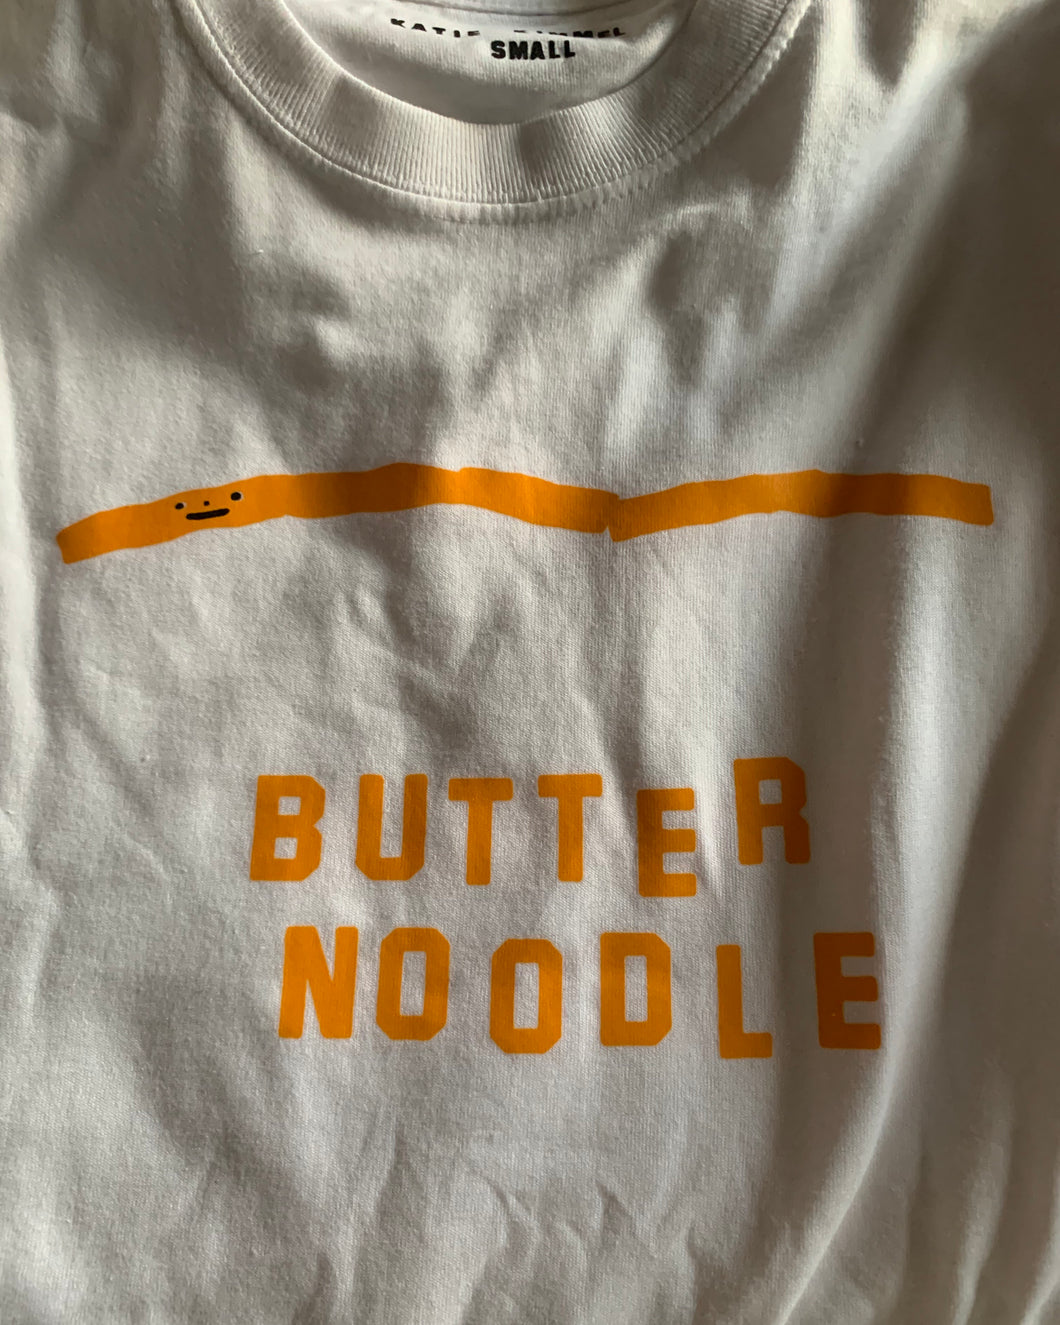 Katie Kimmel “Butter Noodle”